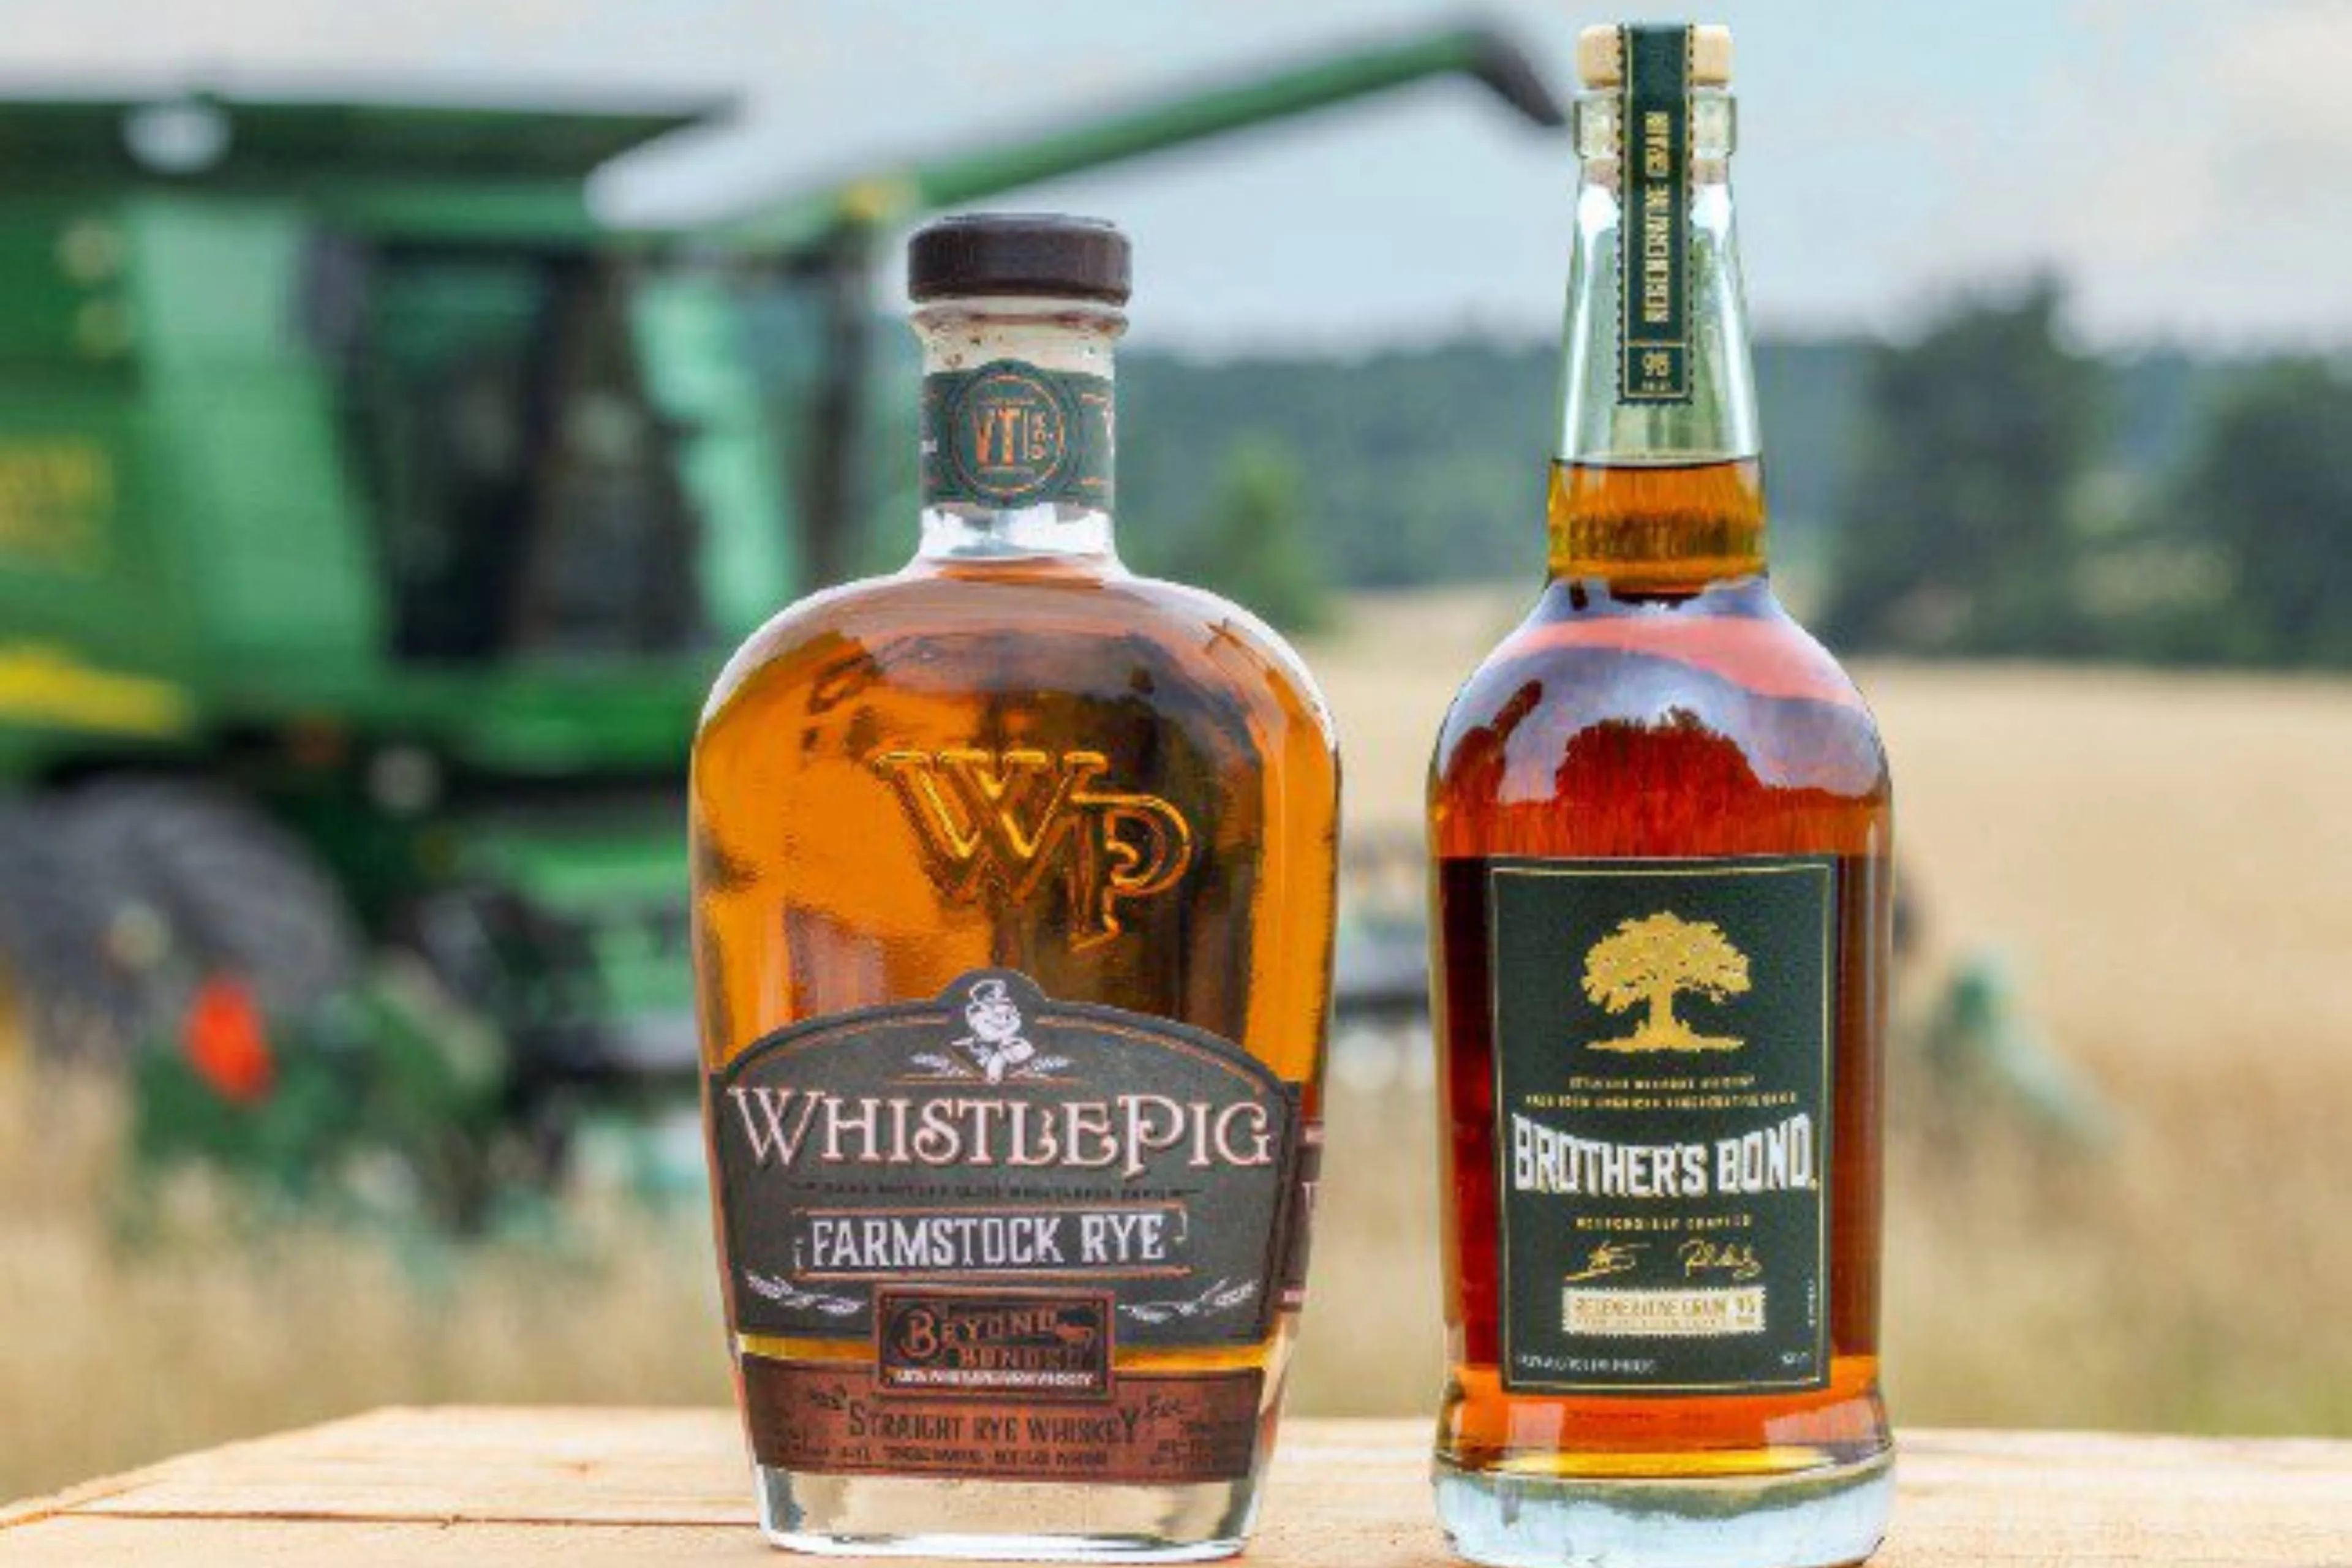 brothers bond bourbon whistlepig farmstock rye